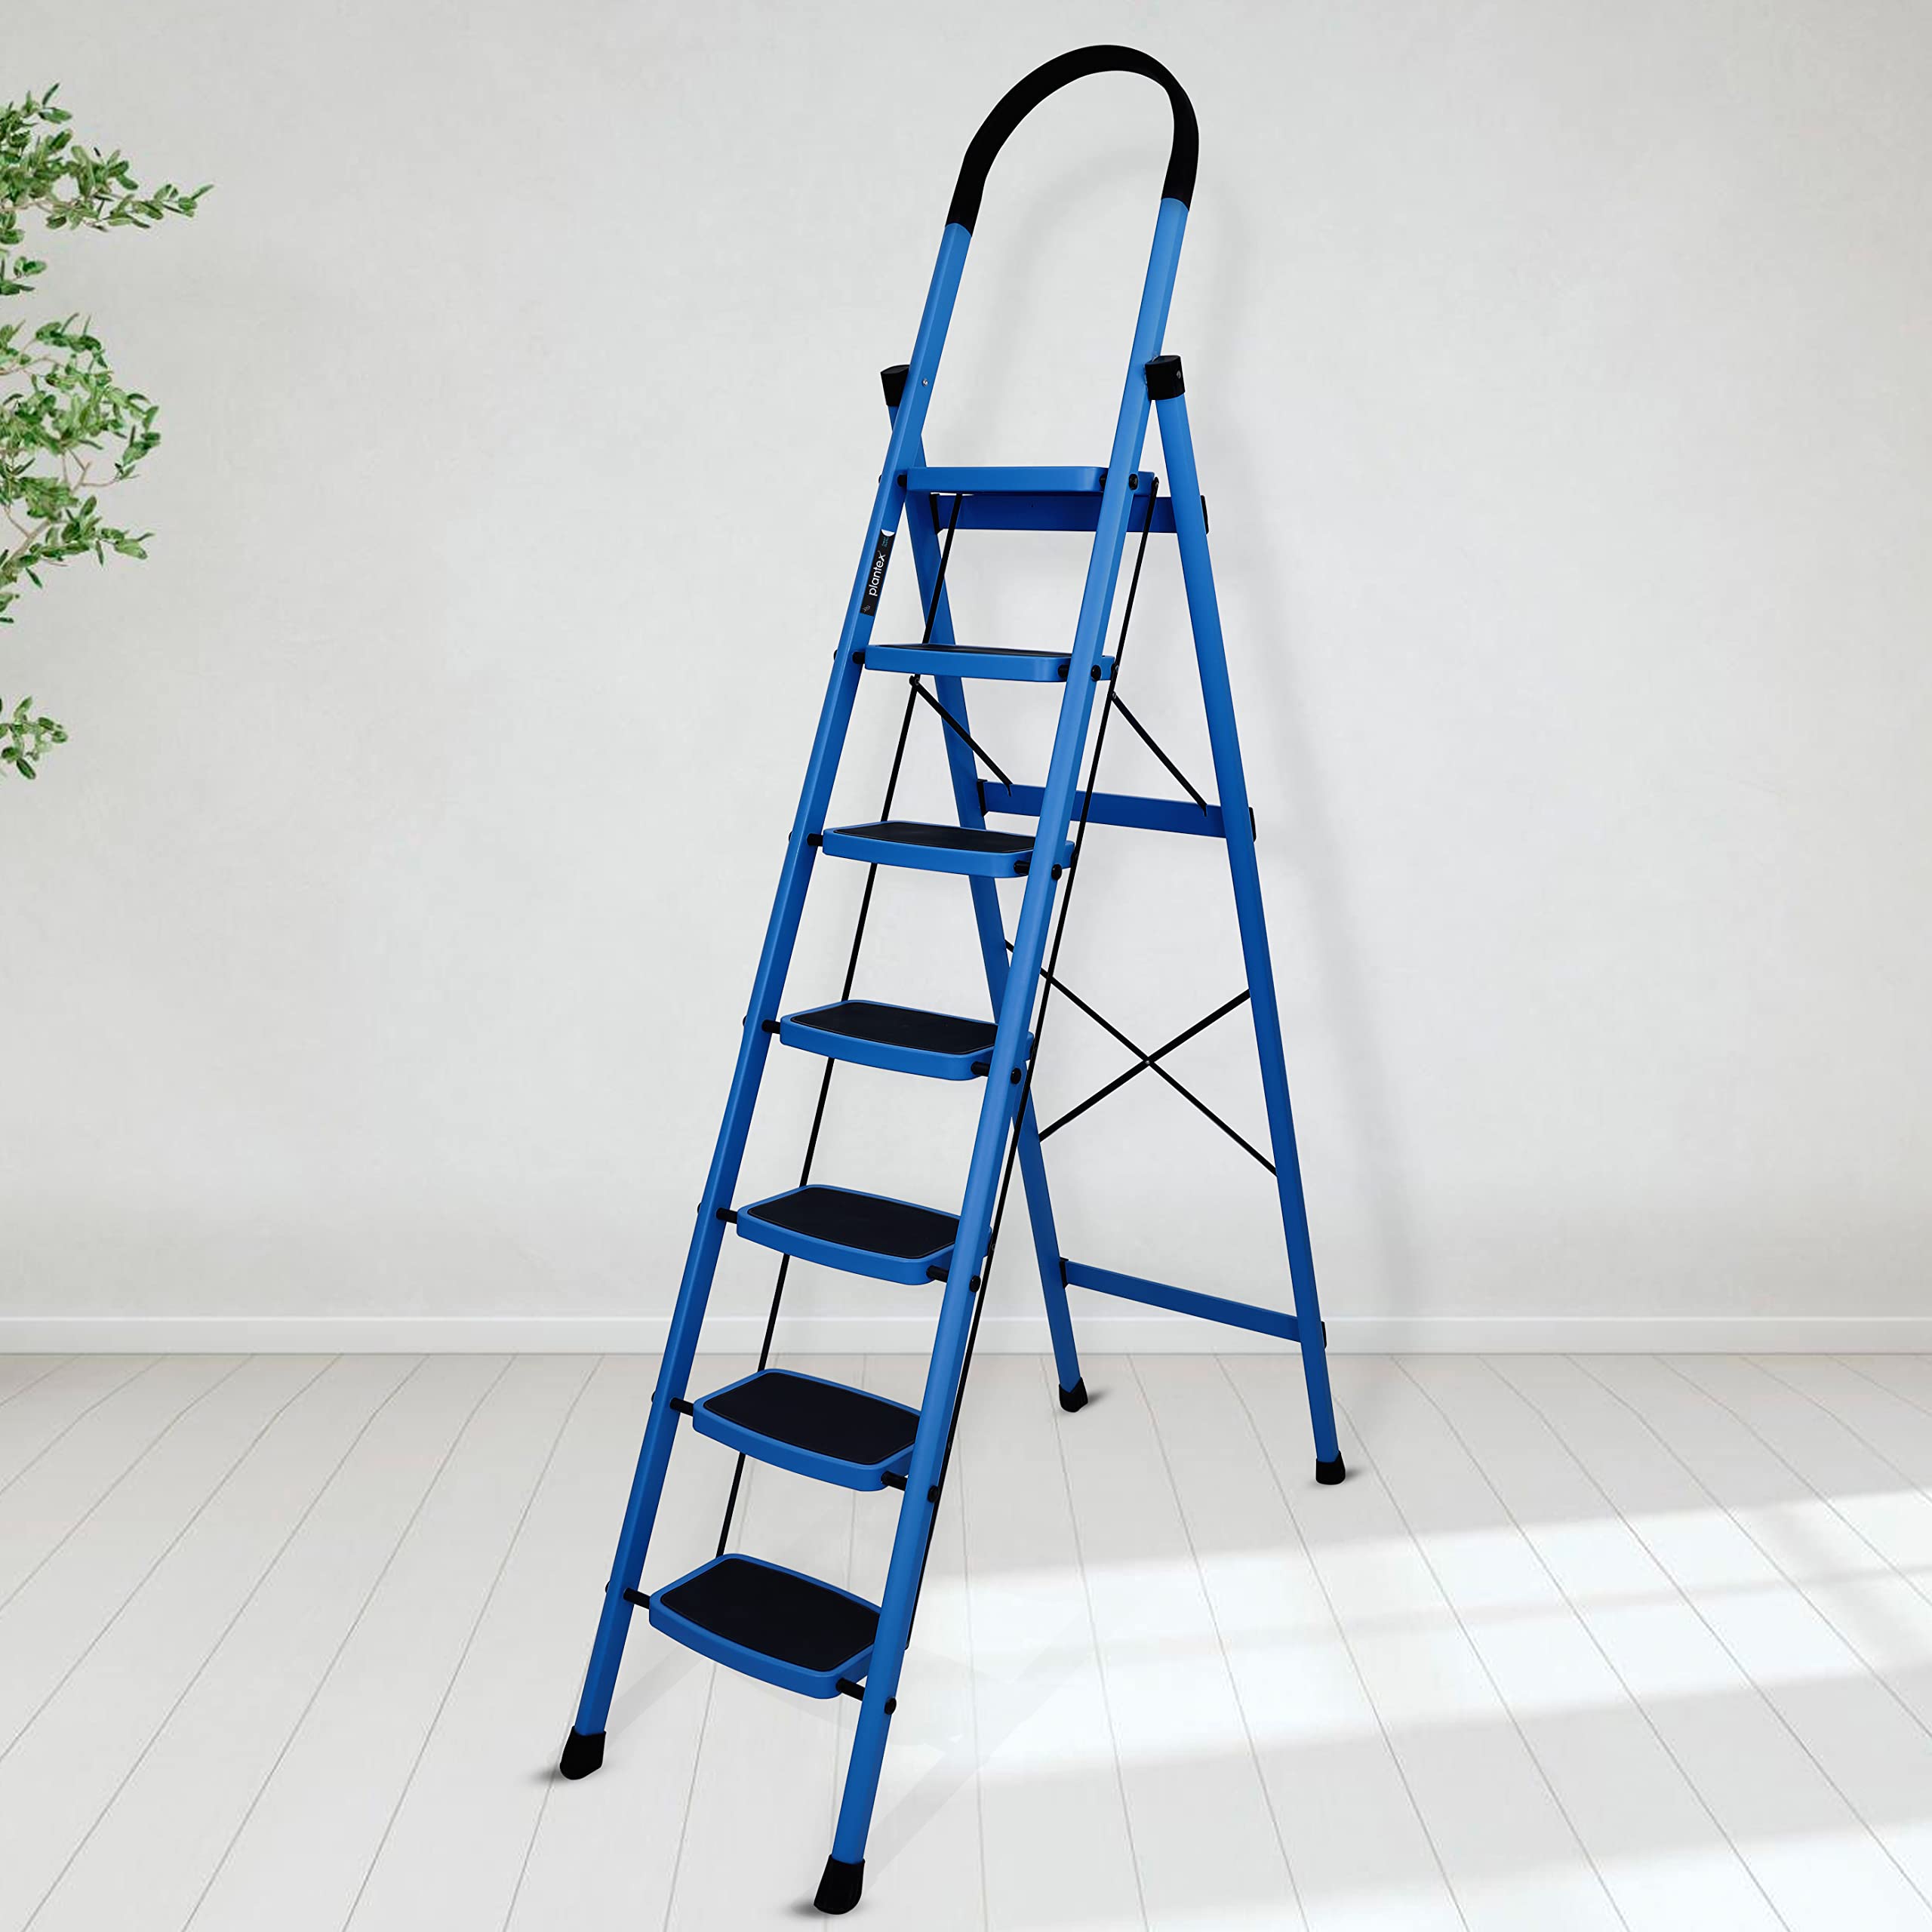 Plantex Premium Steel Foldable 7-Step Ladder for Home - Wide Anti Skid Step Ladder (Blue & Black)